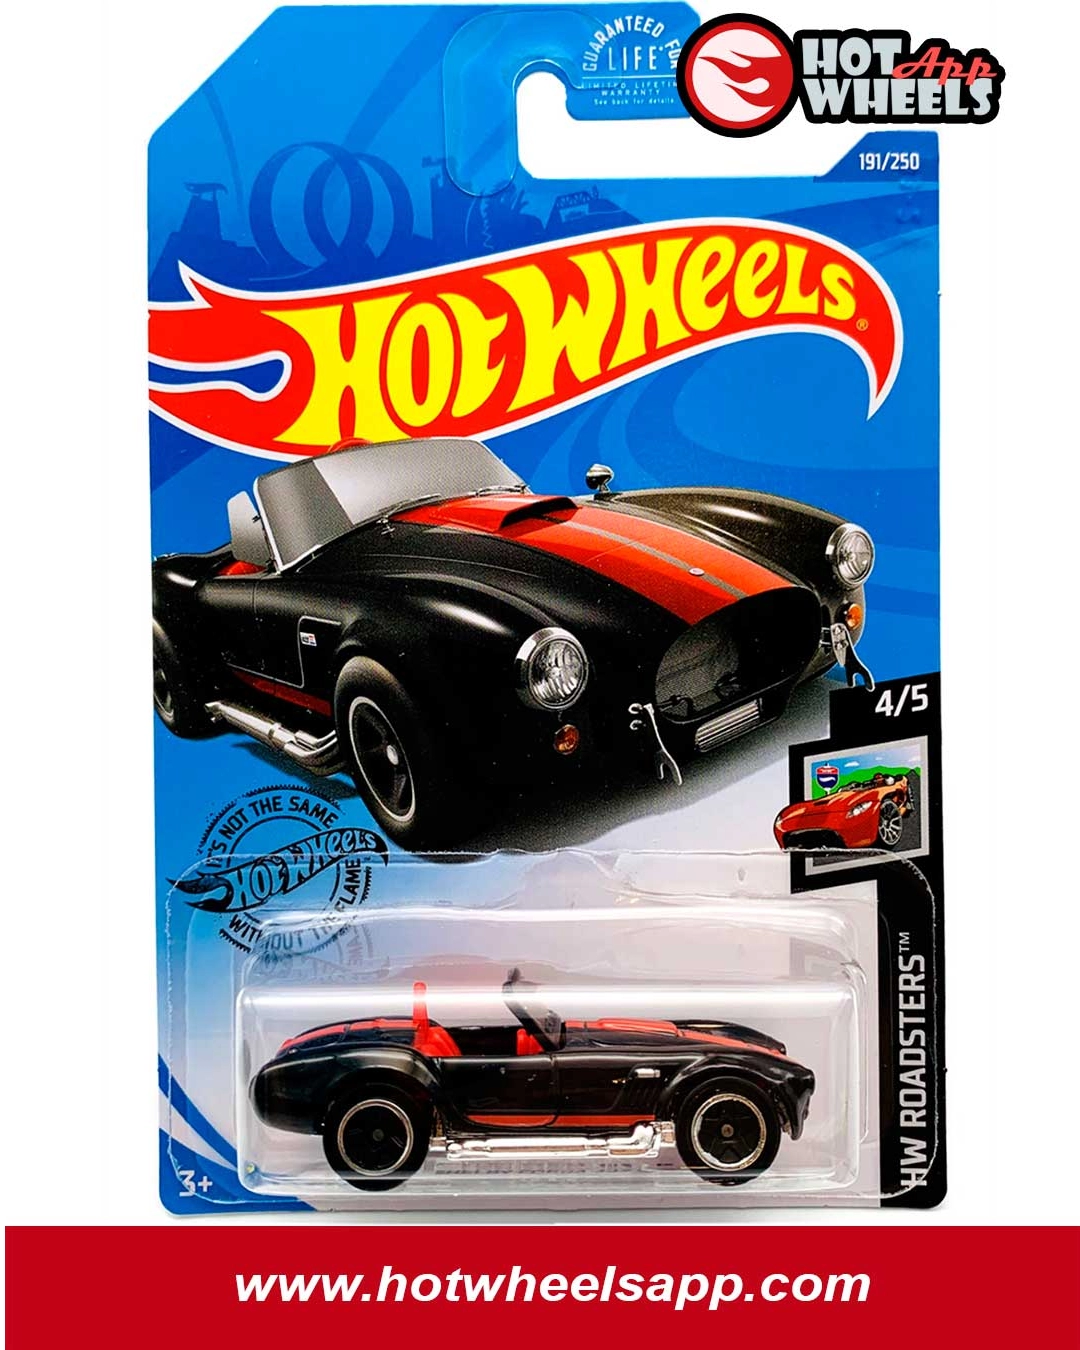 Shelby Cobra 427 S/C Hot Wheels 2020 Caja L Hw Roadster 4/5 Mattel 